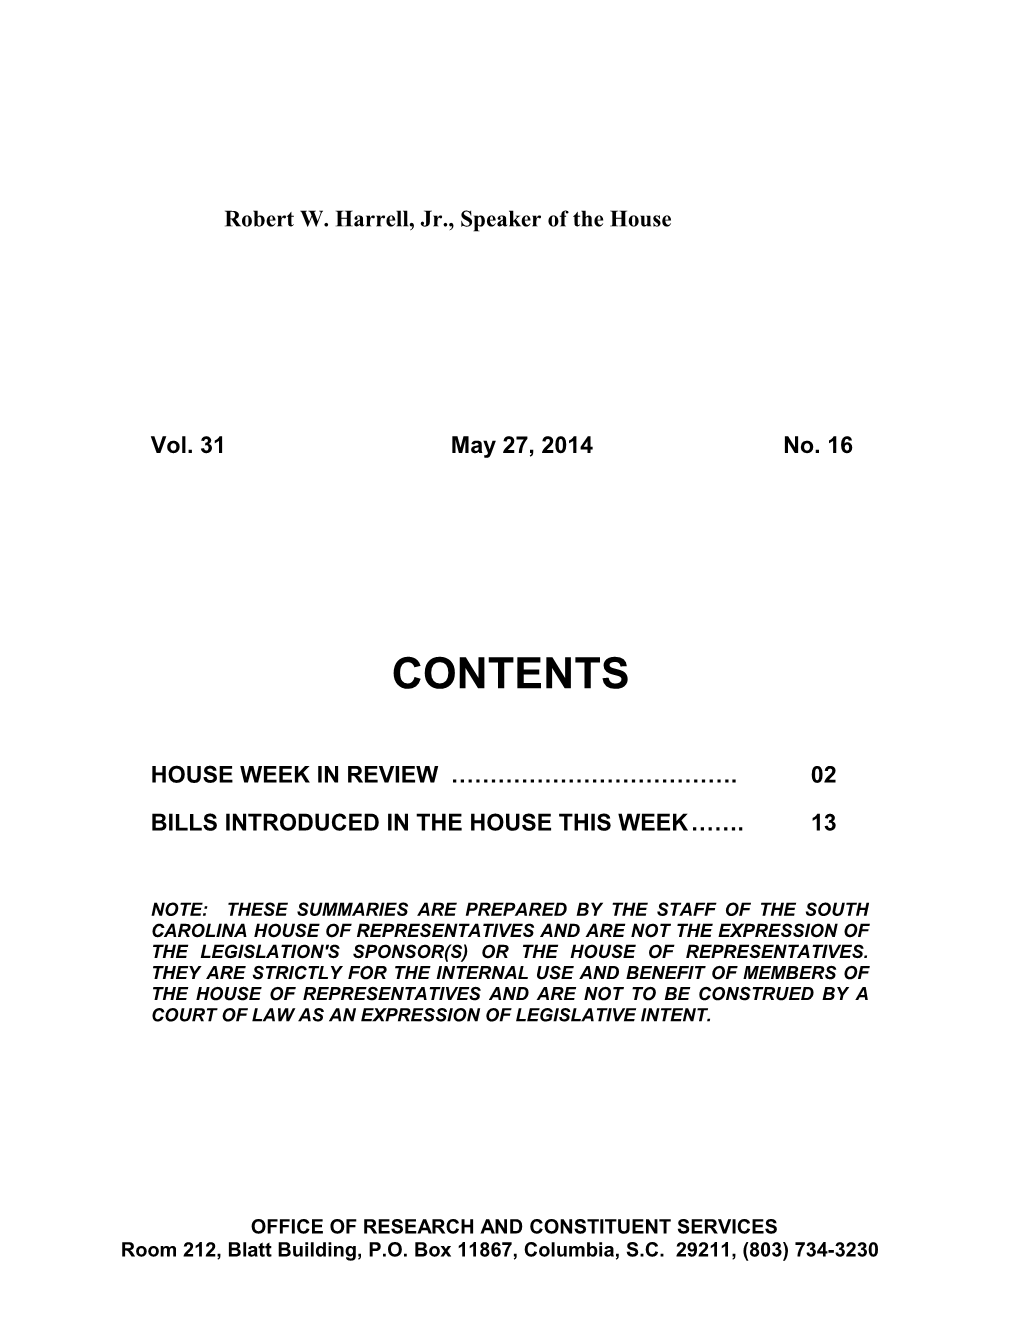 Legislative Update - Vol. 31 No. 16 May 27, 2014 - South Carolina Legislature Online